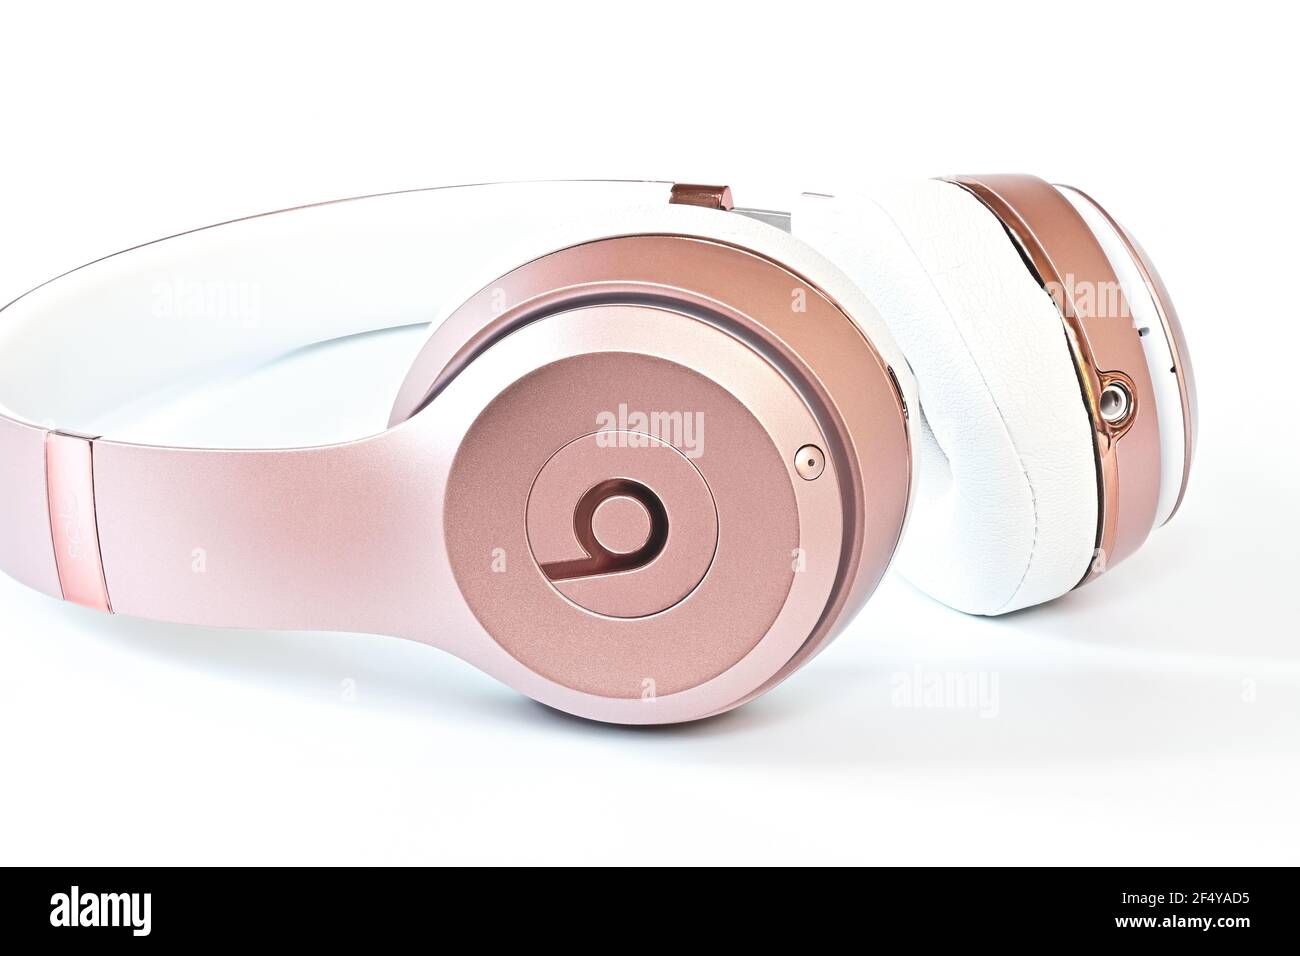 BRAUNSCHWEIG, 22. MÄRZ 2021: Apple Beats Solo3 Wireless Kopfhörer, Roségold.  Rosa On-Ear-Kopfhörer isoliert auf Weiß Stockfotografie - Alamy